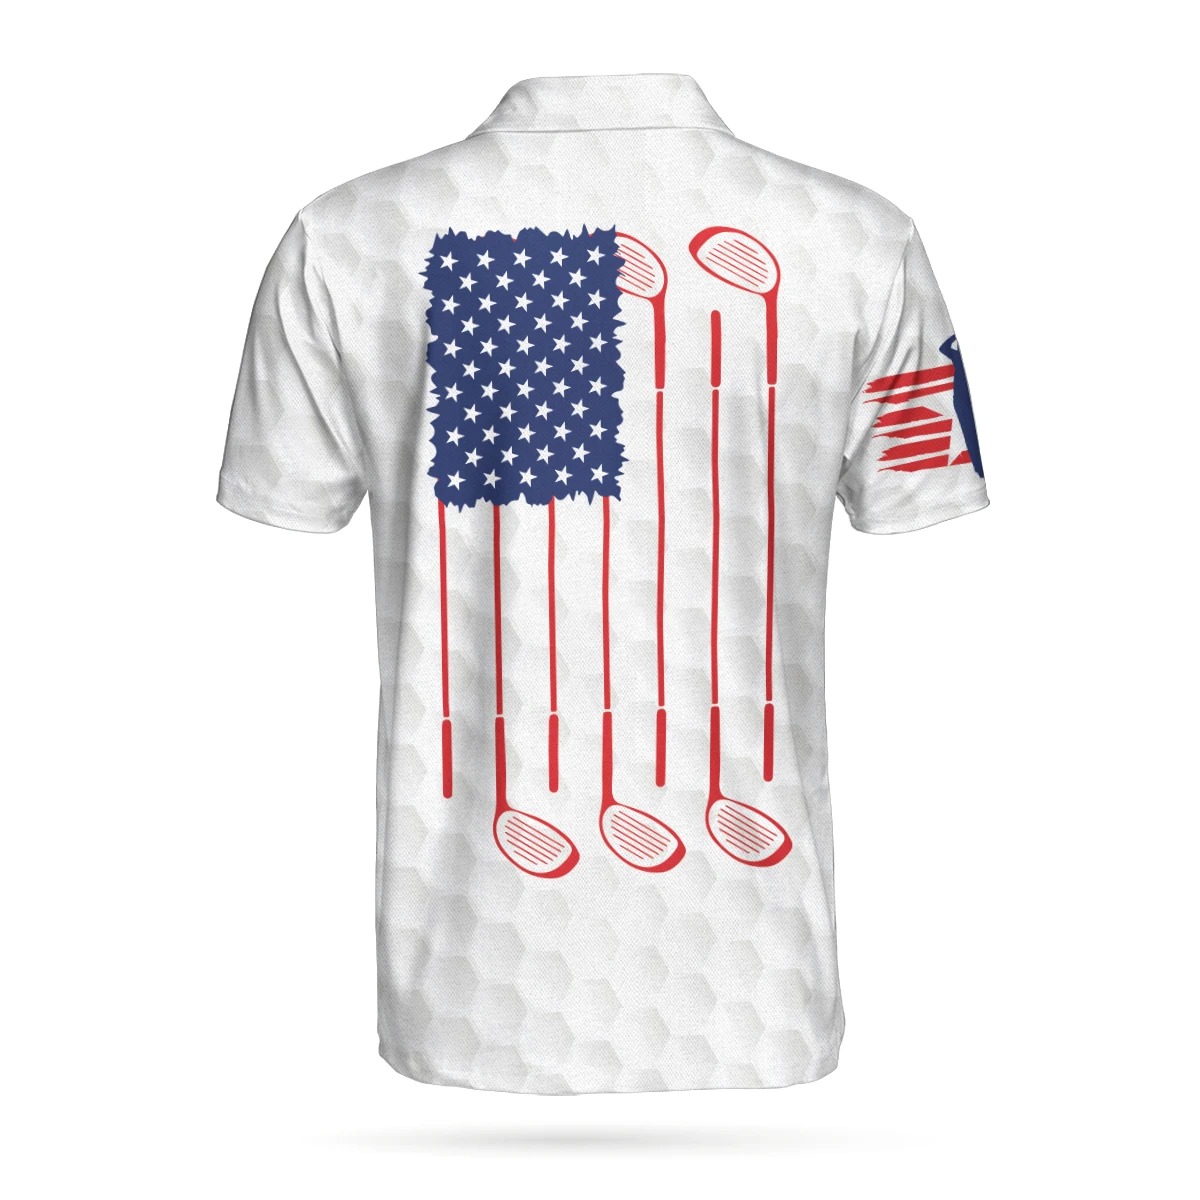 Golf American flag polo shirt3